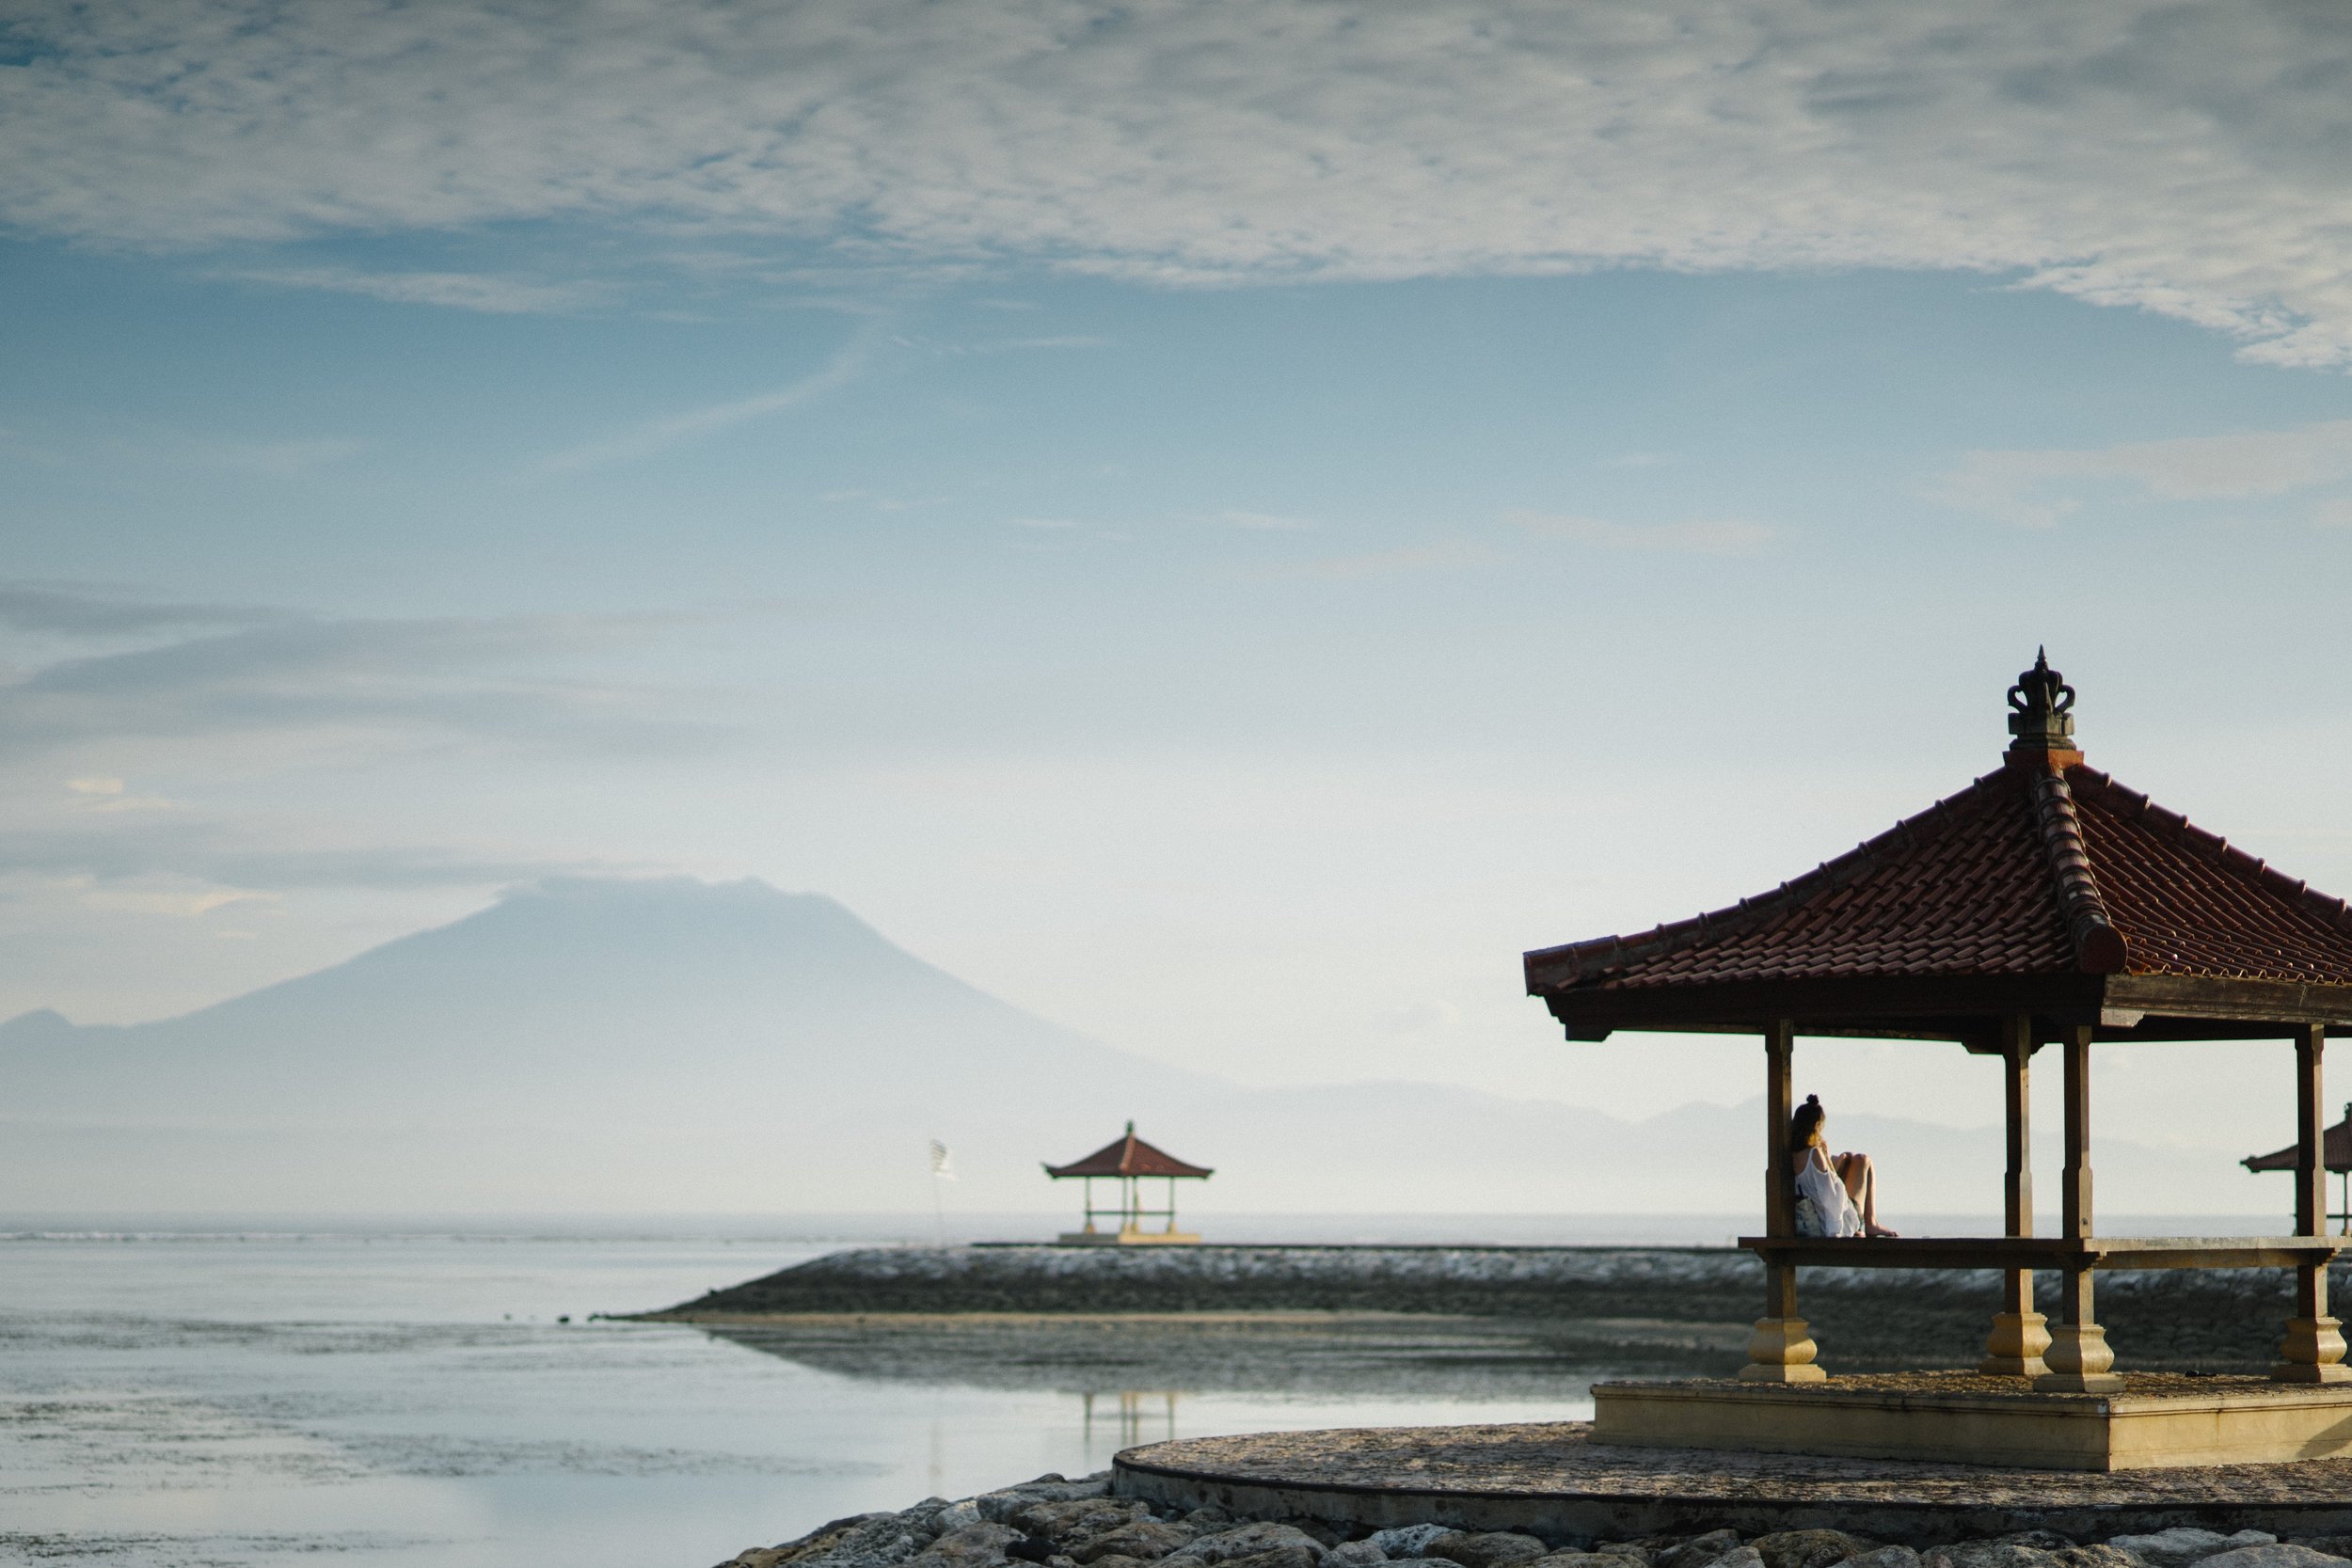 Bali's Must-Visit Shops, Restaurants, and Hotels